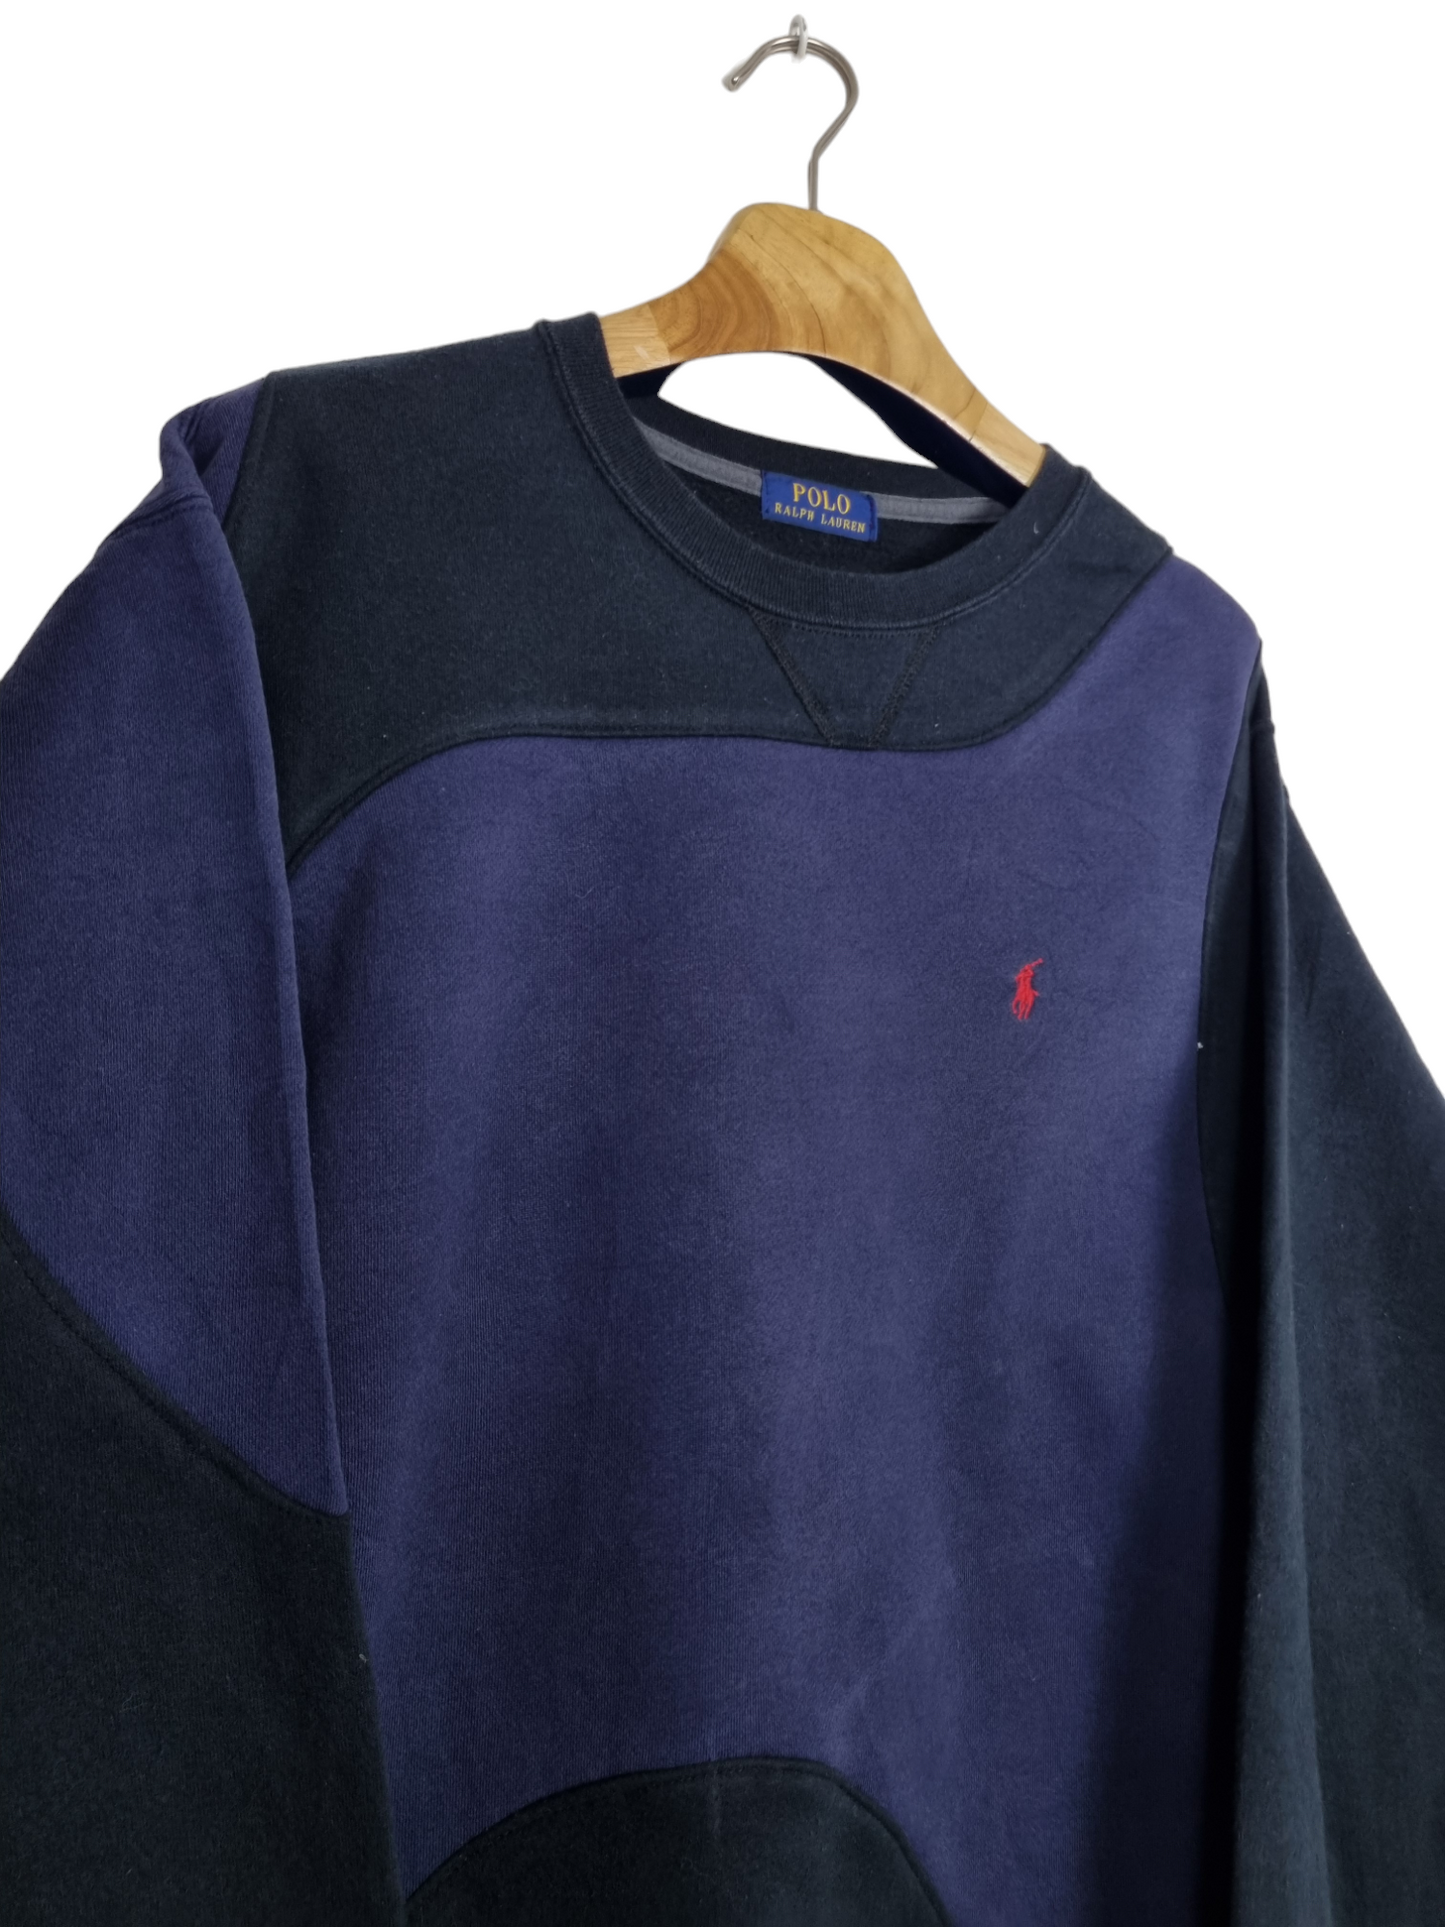 Ralph Lauren chest logo sweater maat M